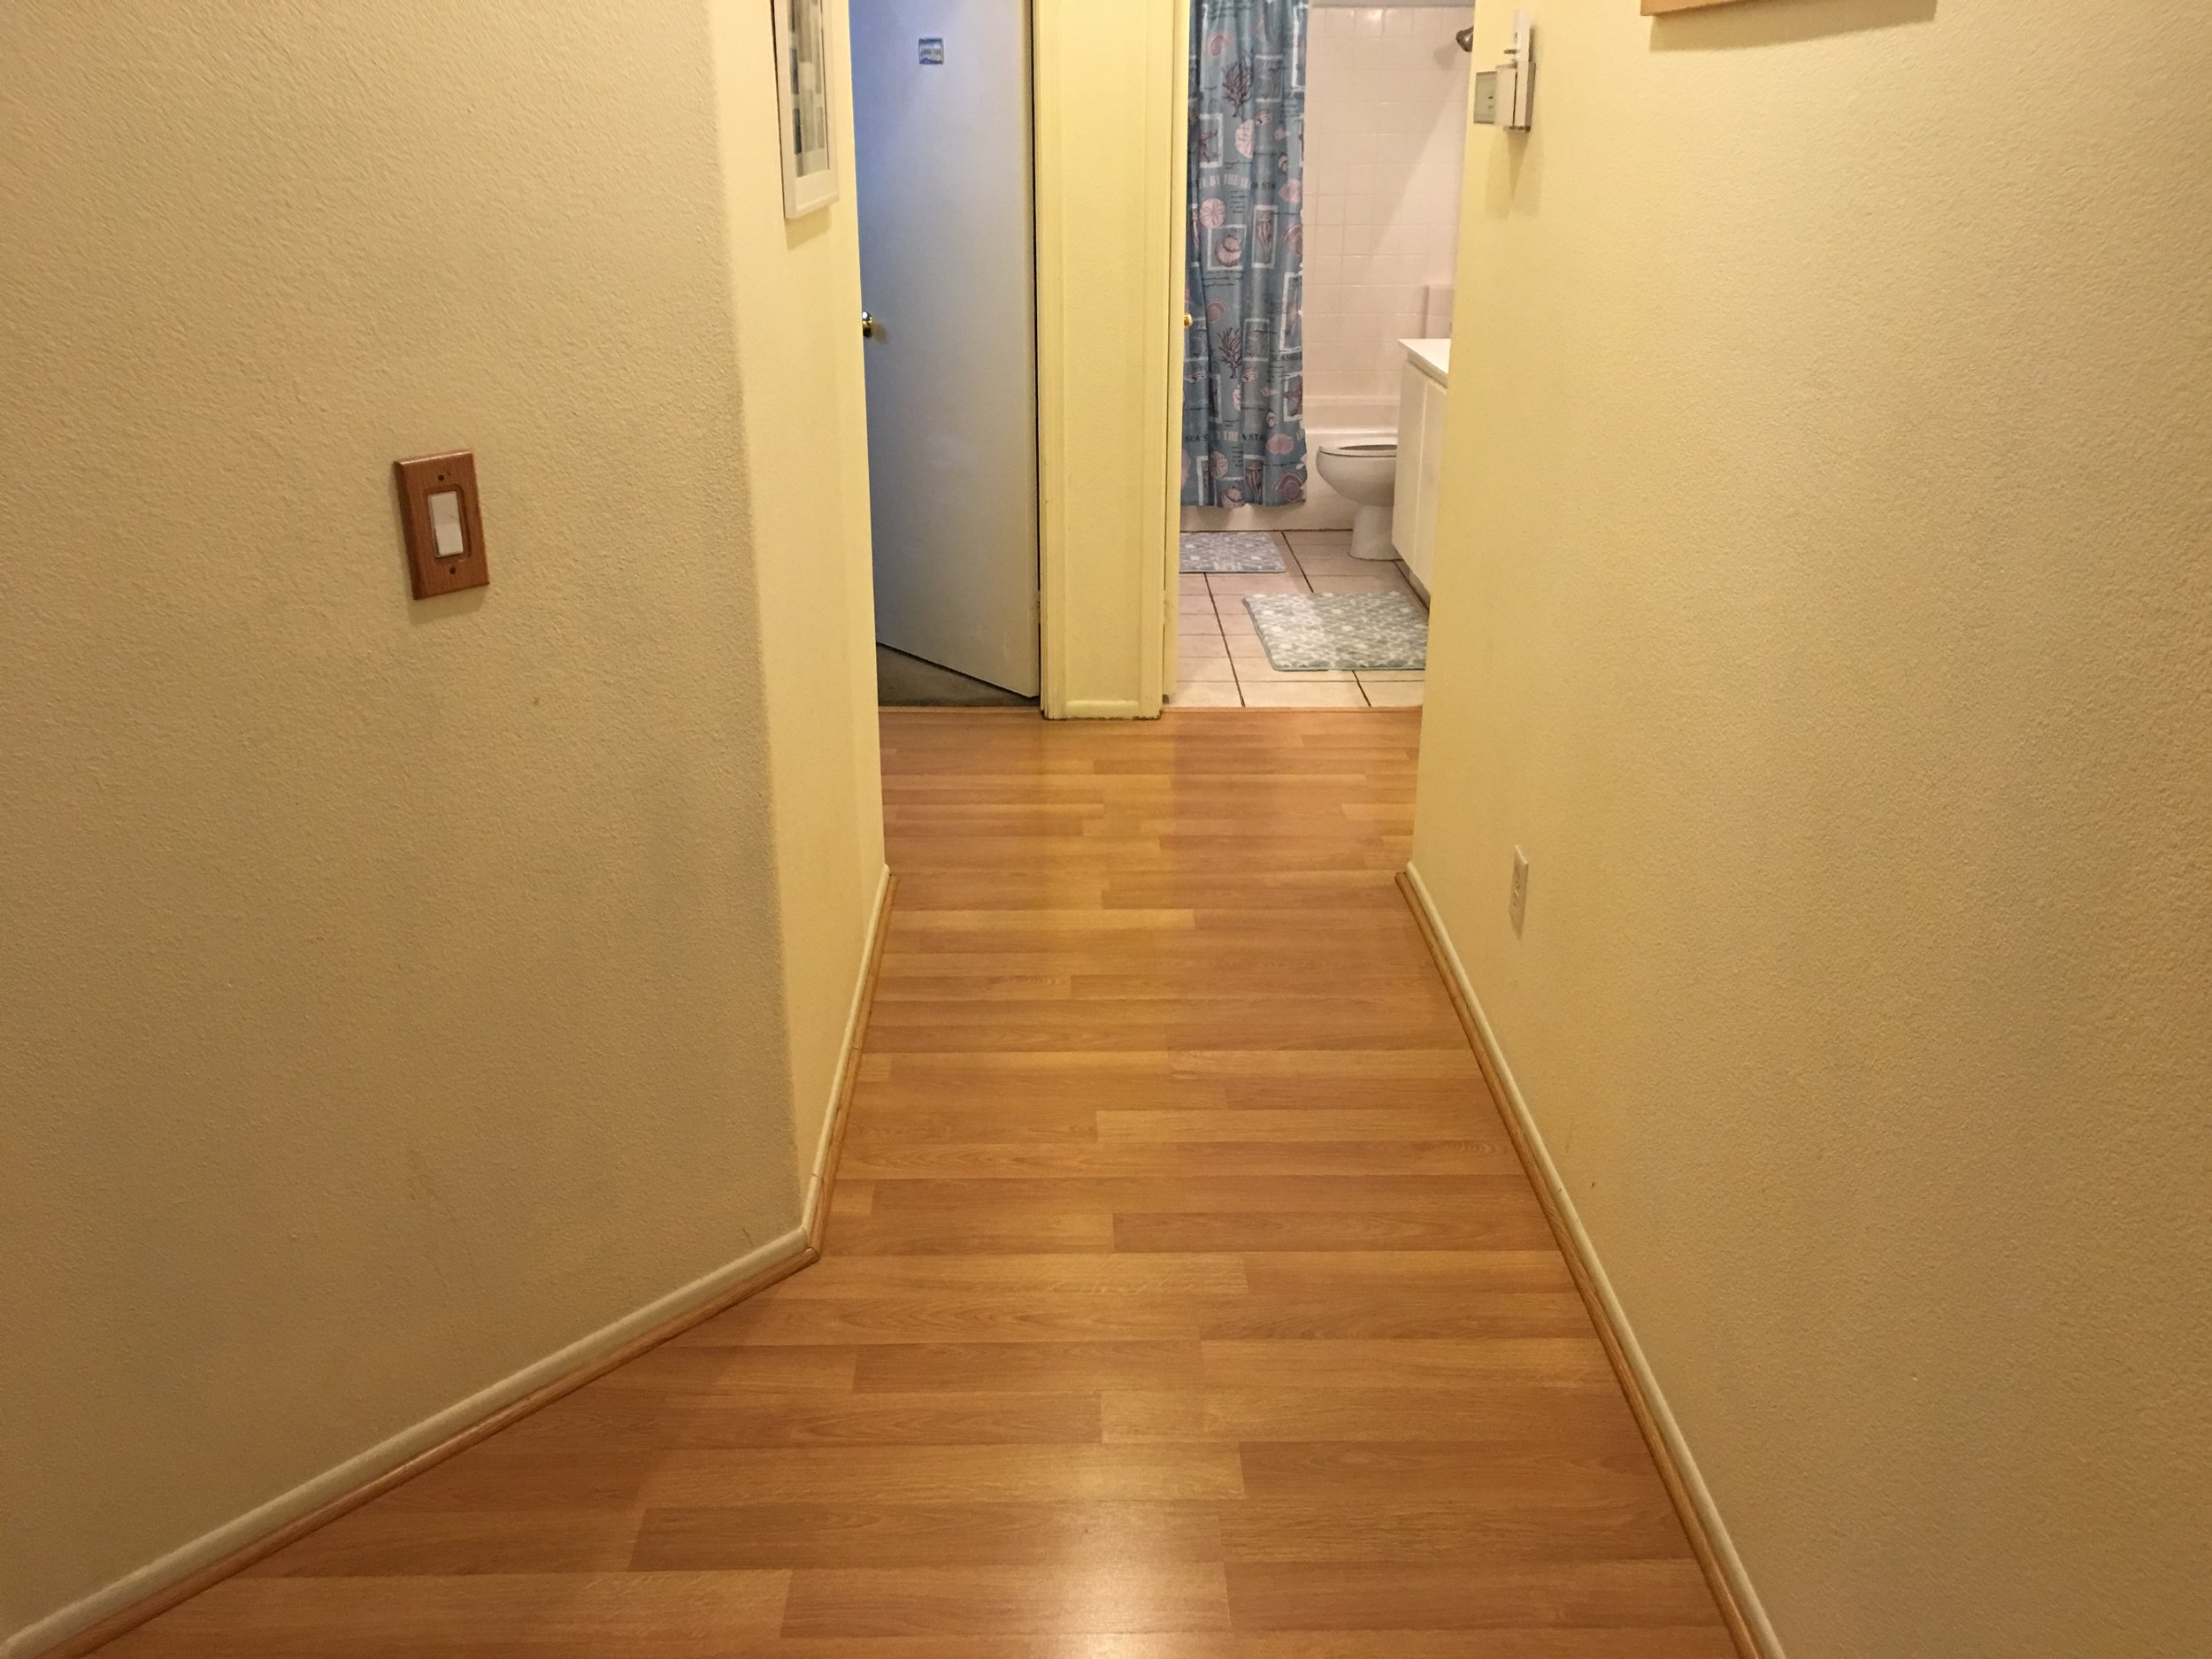 Hallway 2.JPG